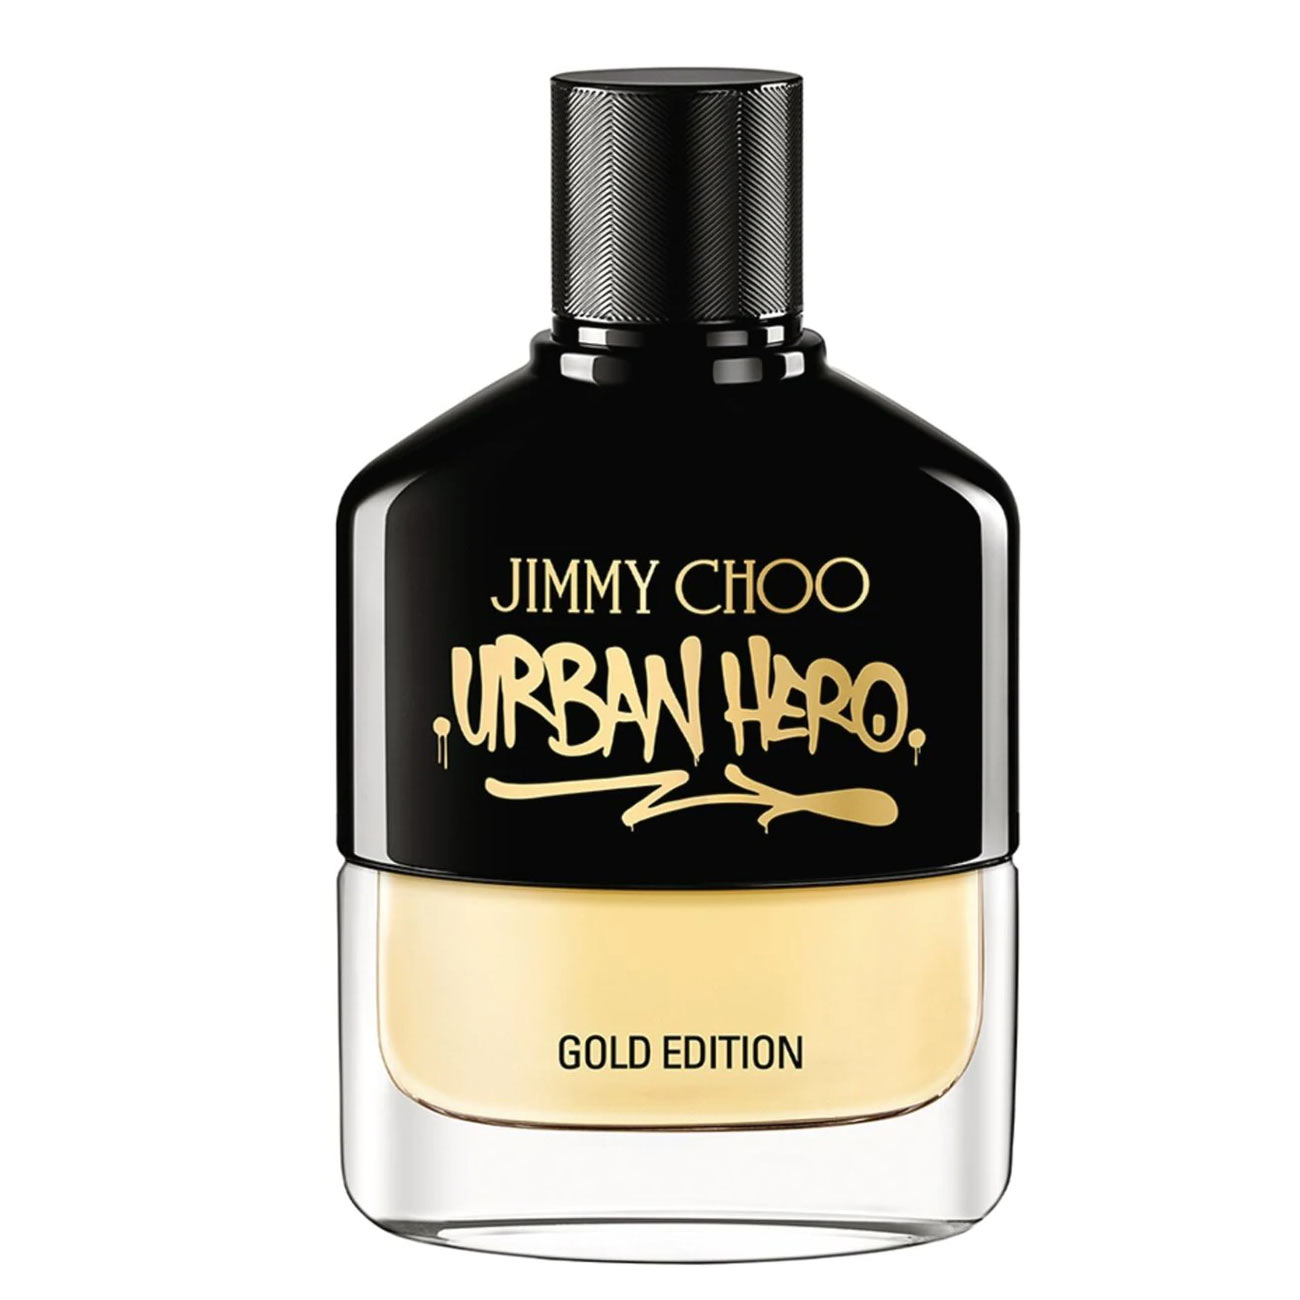 Urban Hero Gold Edition Jimmy Choo Image